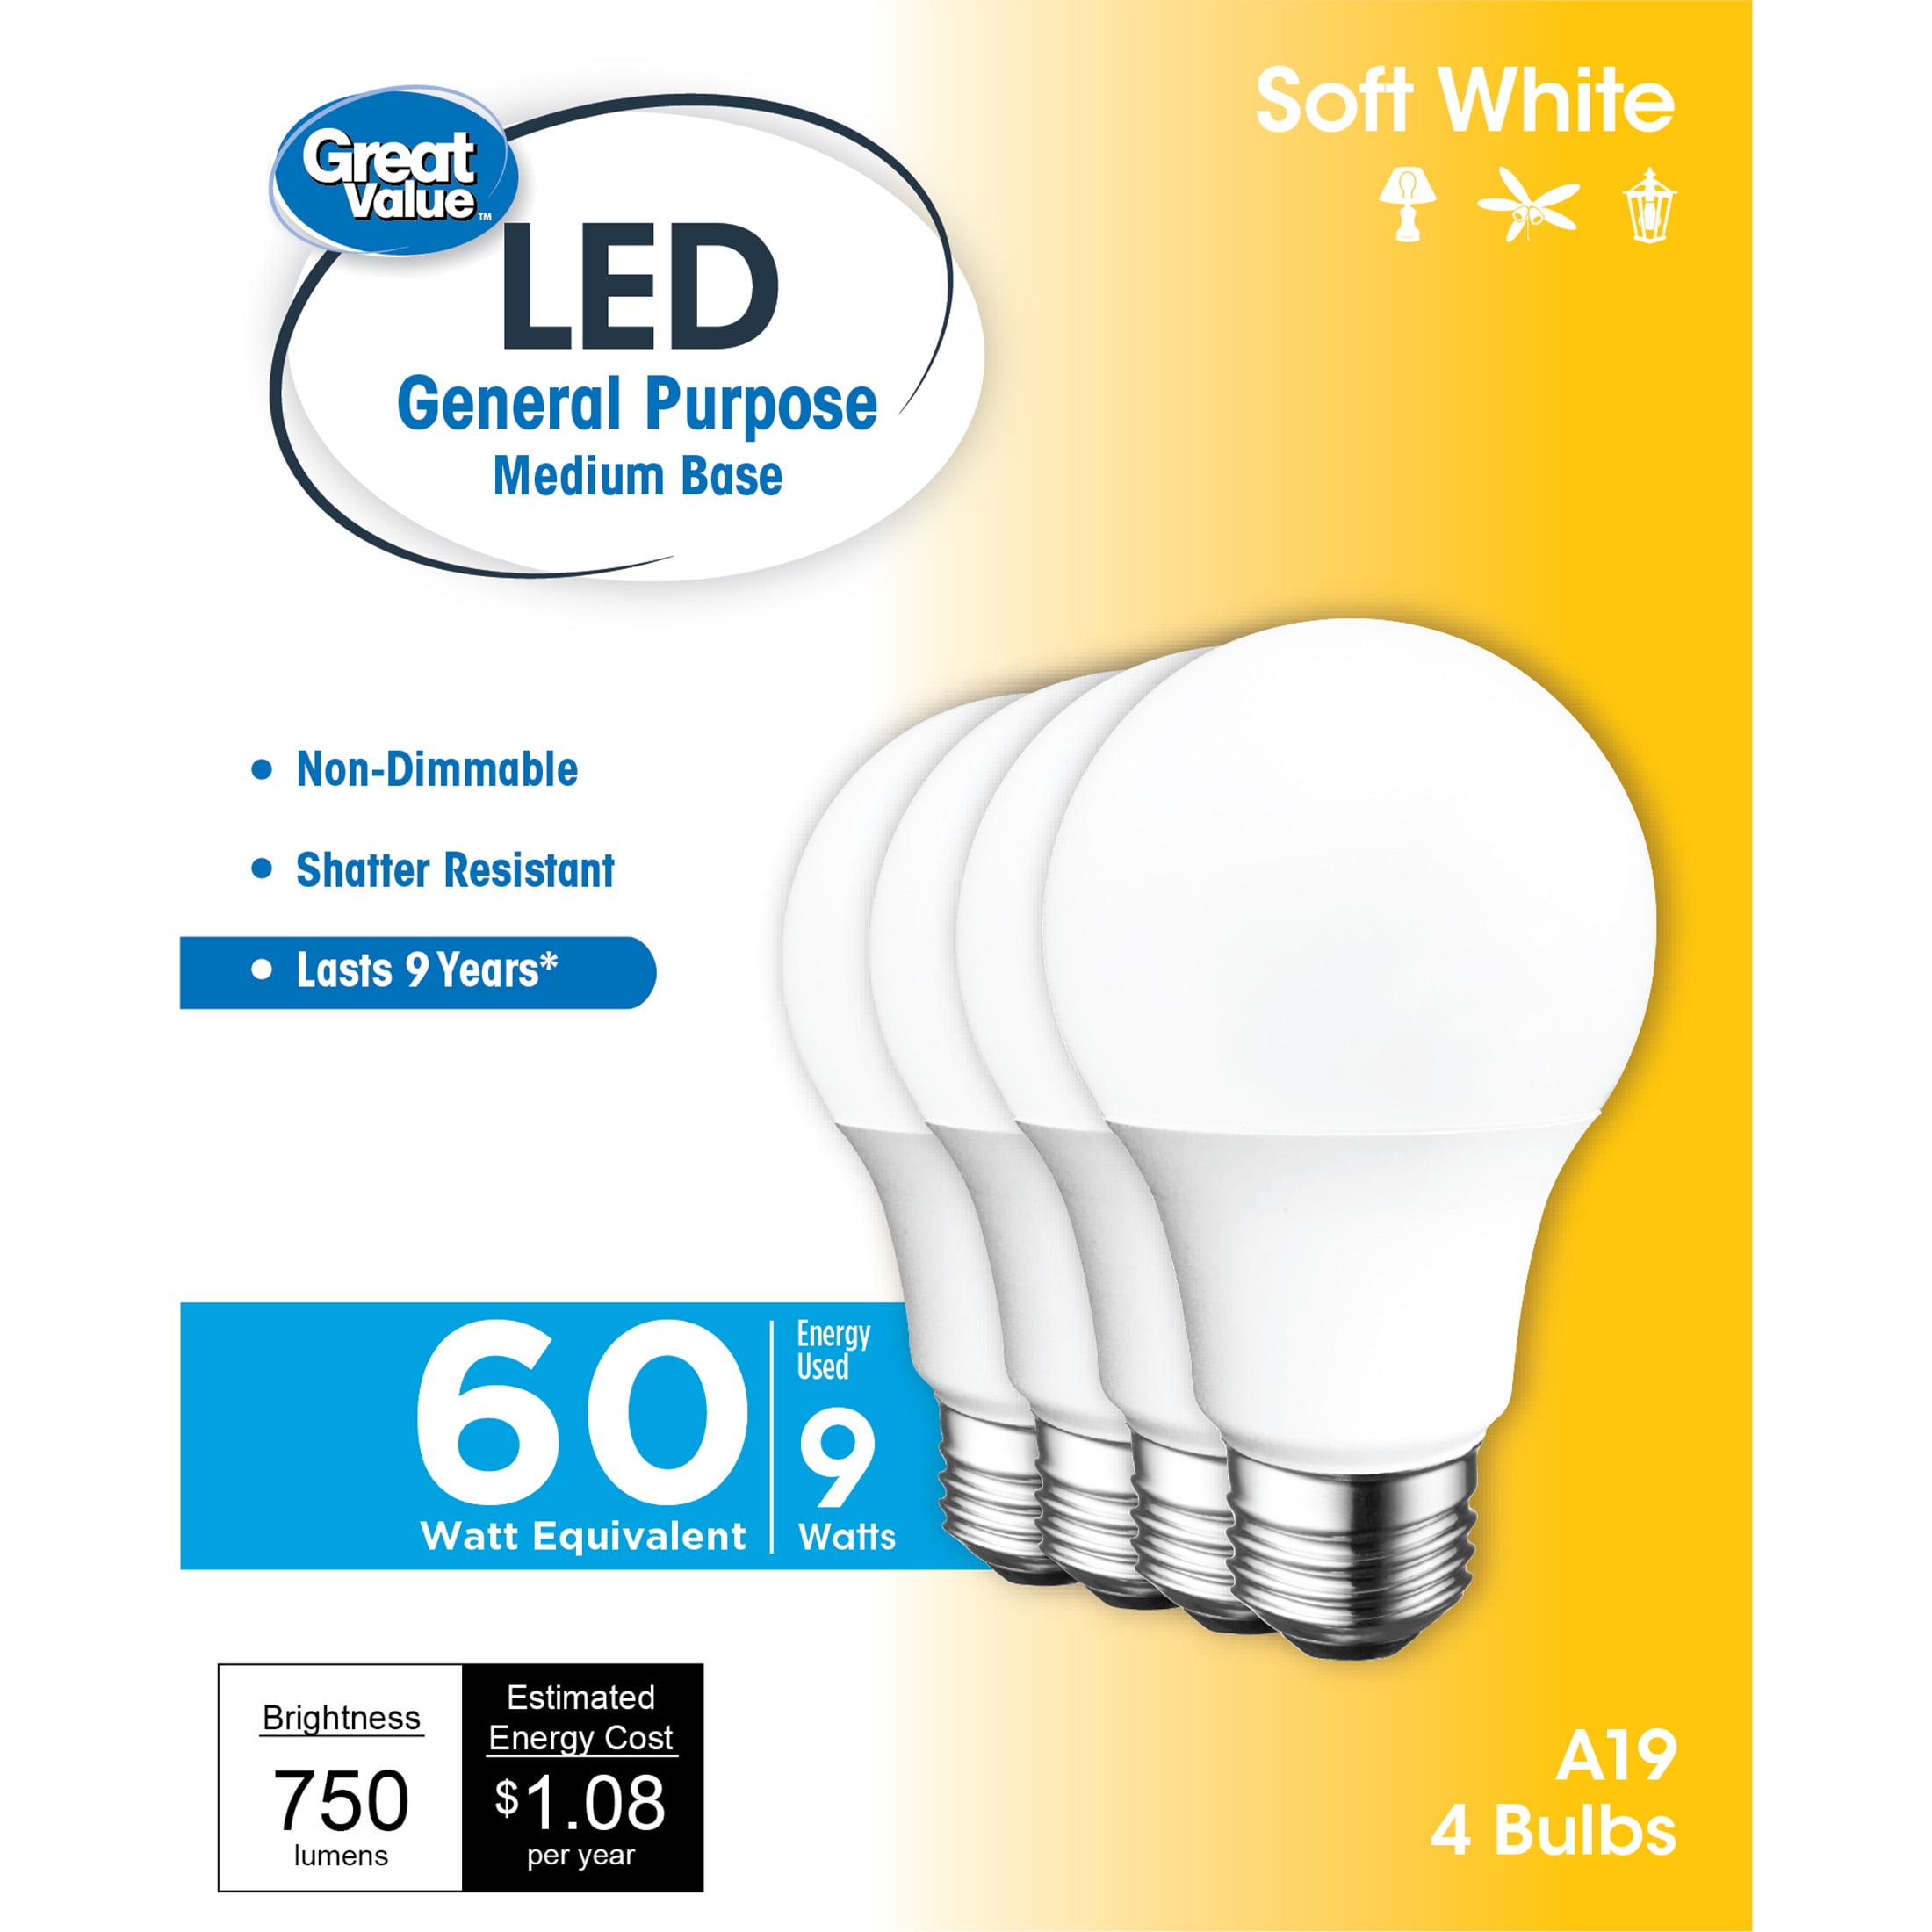 Great Value 9-Year 60 Watt LED Light Bulb,  A19 General Purpose Lamp E26 Medium Base, Non-dimmable, Soft White, 4-Pack